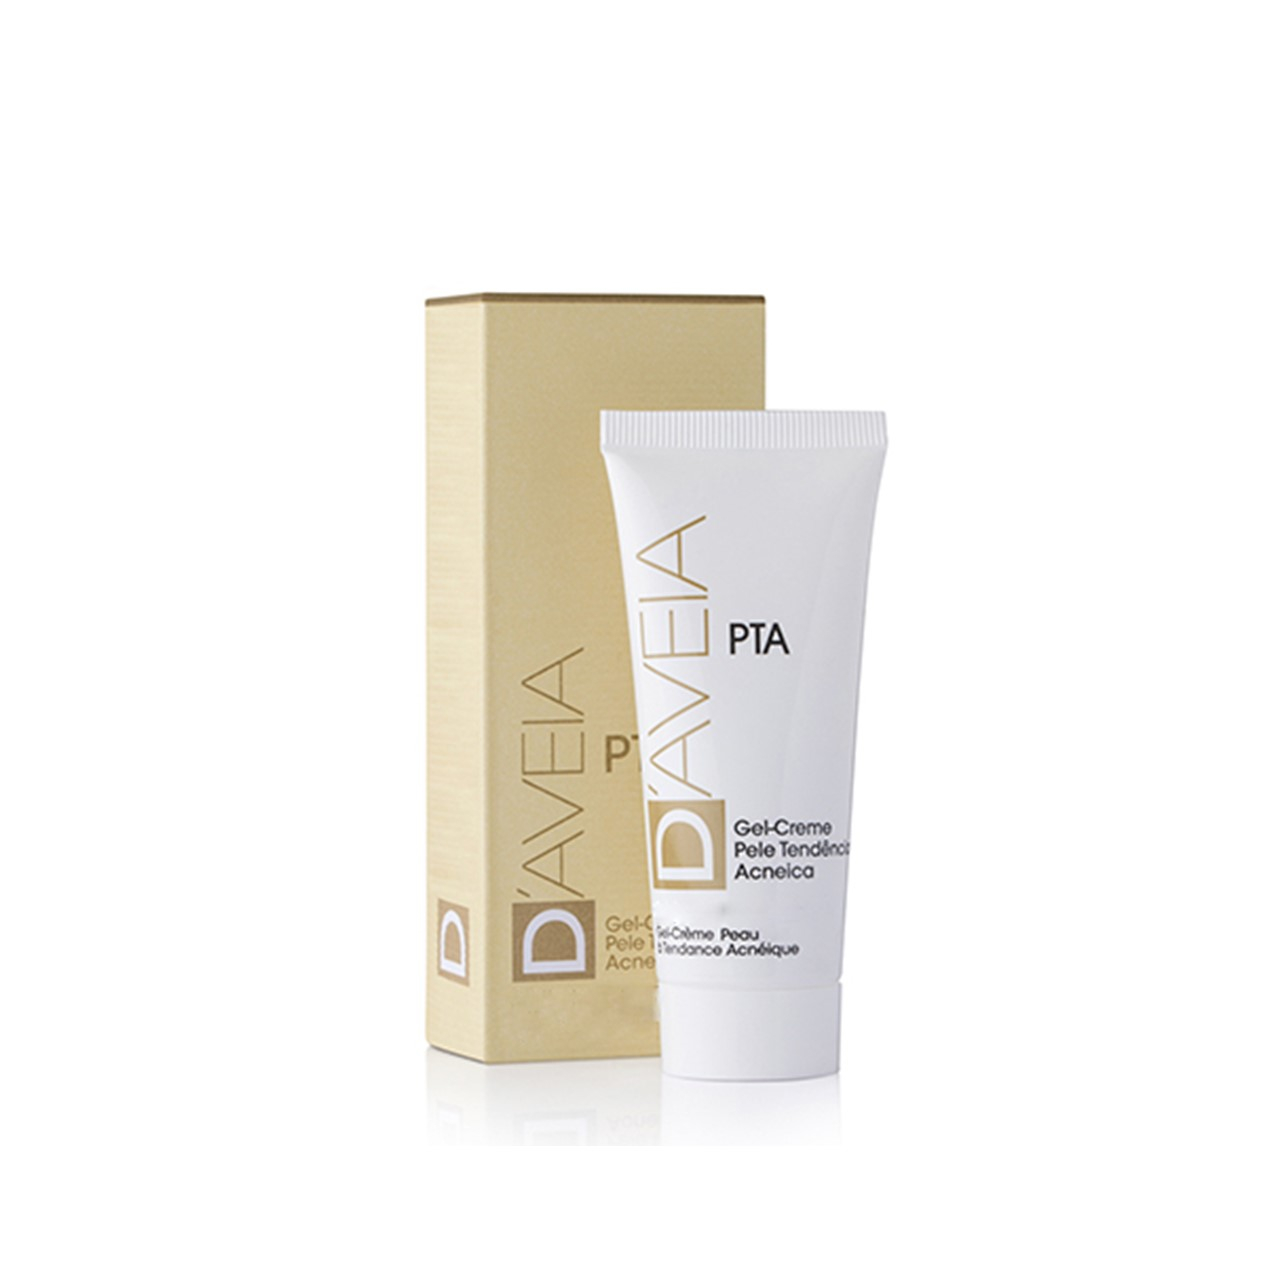 D'AVEIA PTA Acneic Skin Gel-Cream 40ml (1.35fl oz)